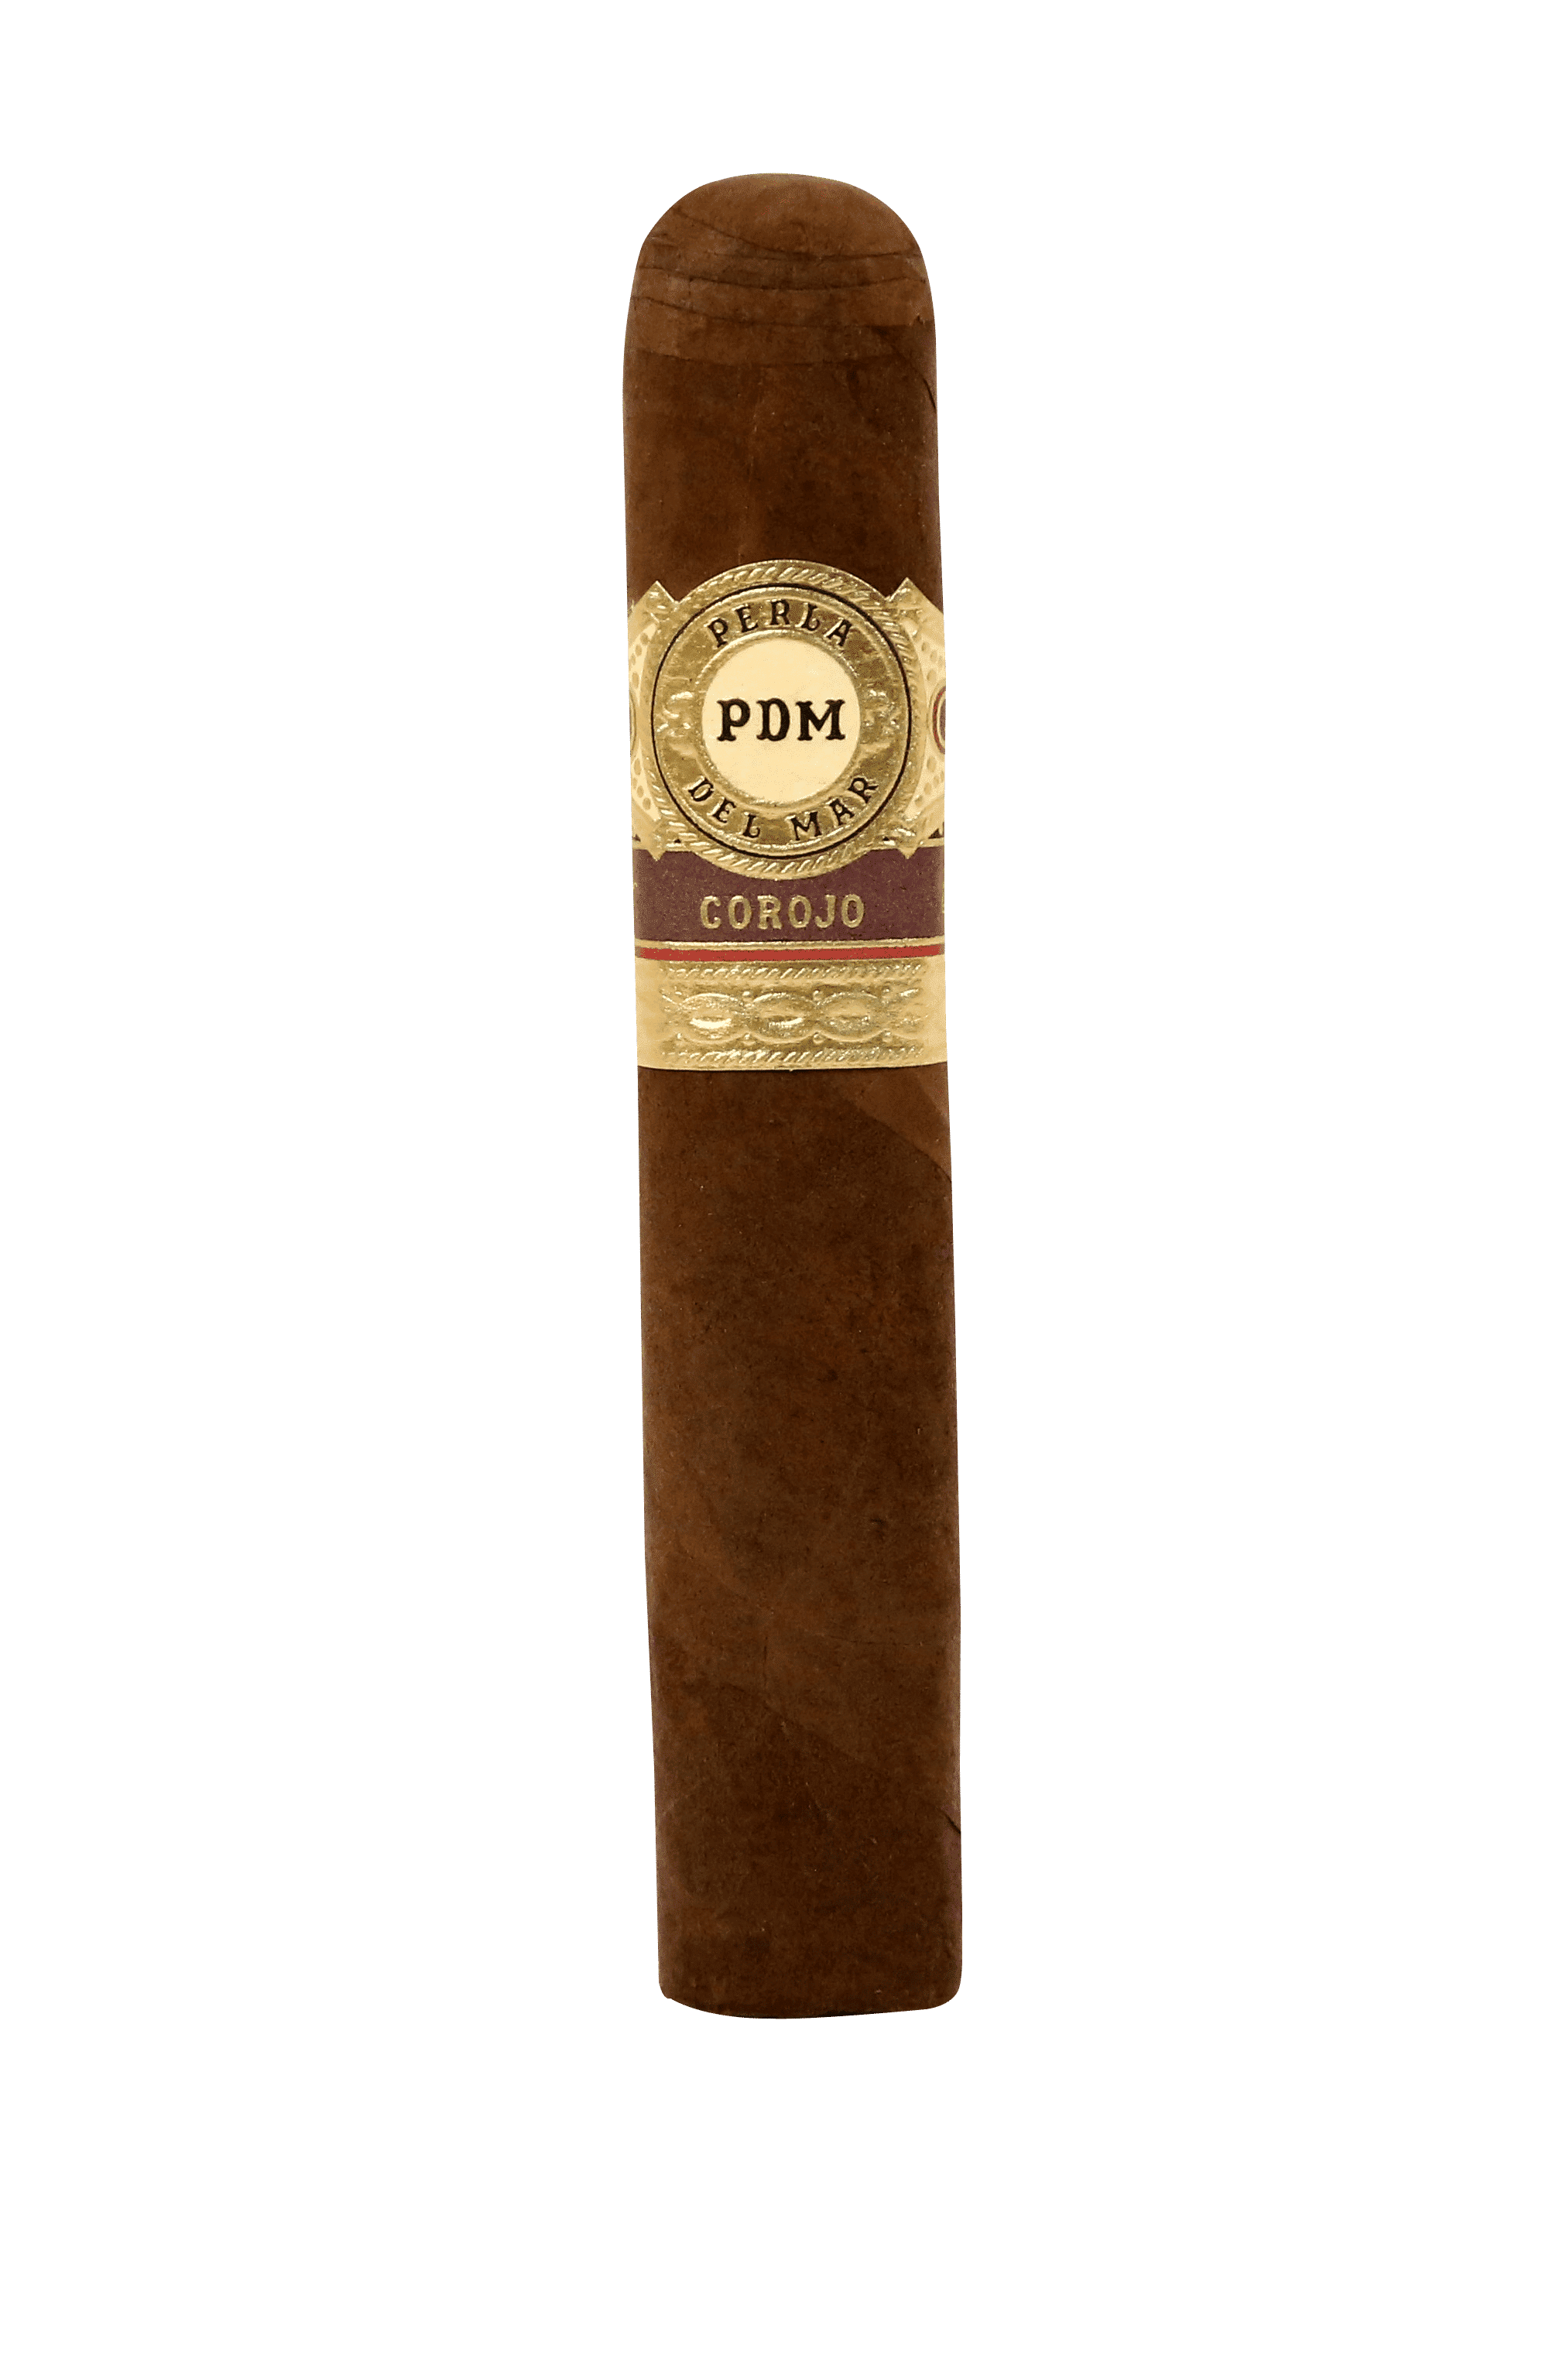 Single Perla Del Mar Corojo Robusto cigar